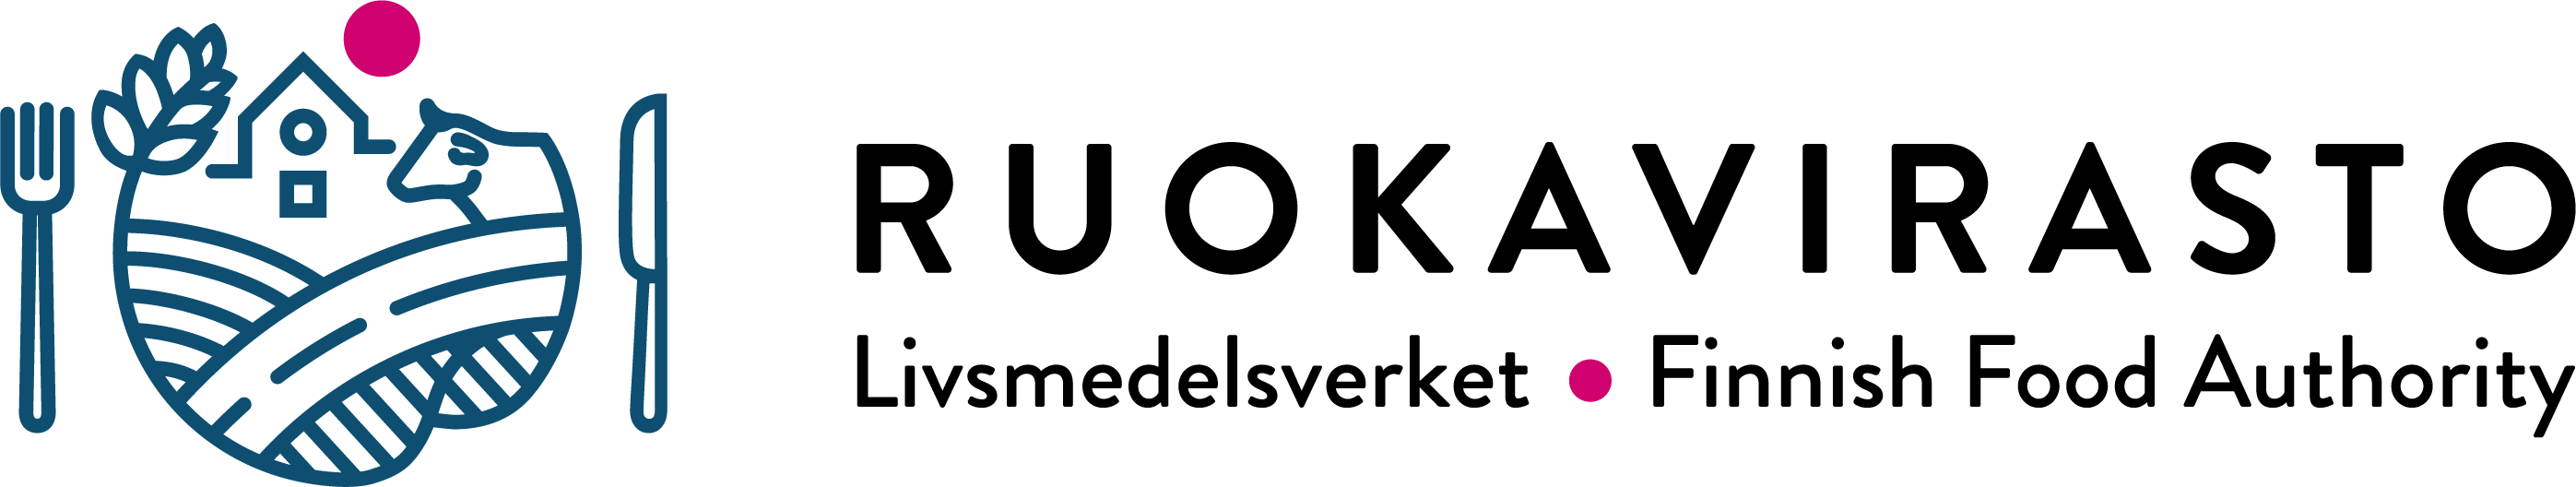 ruokavirasto-logo-vaaka-fi.png